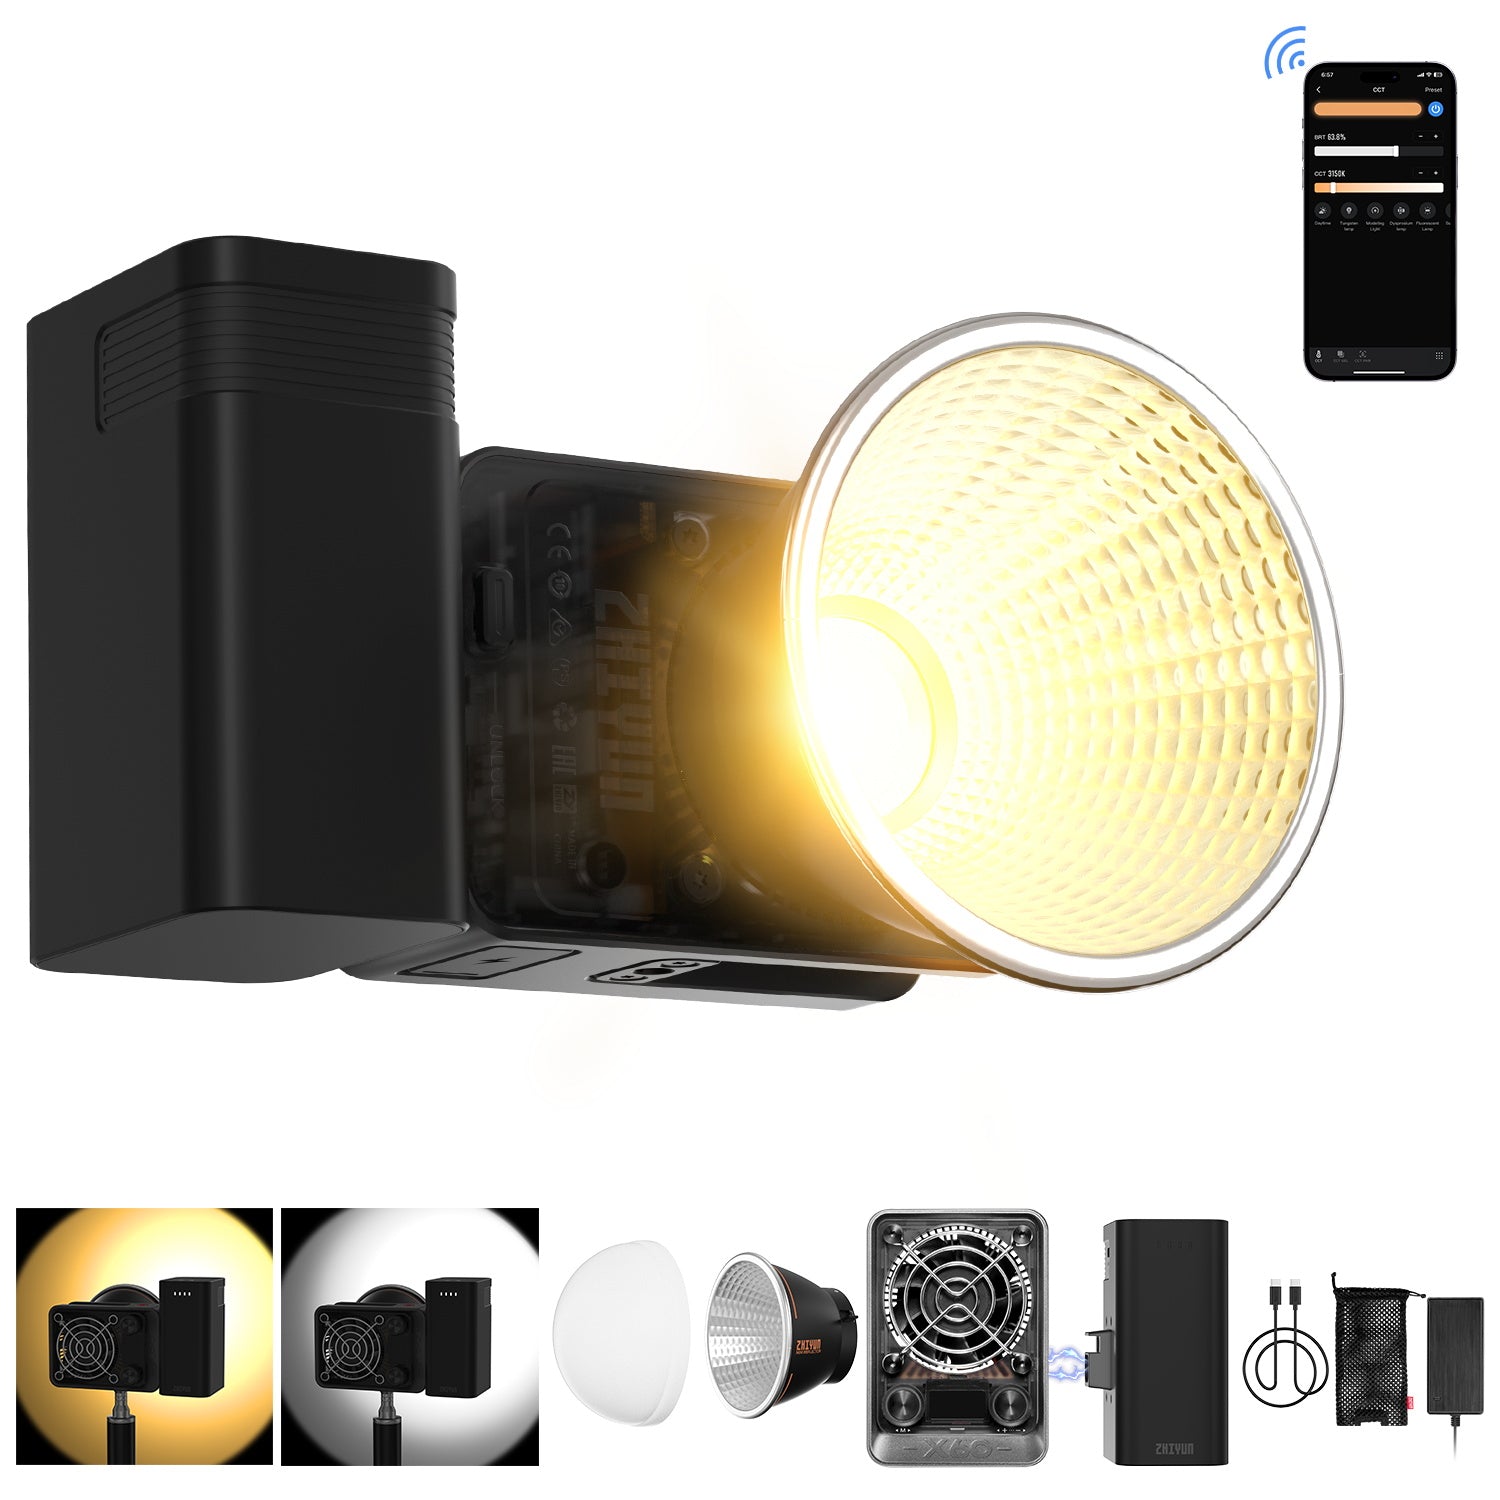 ZHIYUN Molus X60 60W Bi-Color LED Video Light